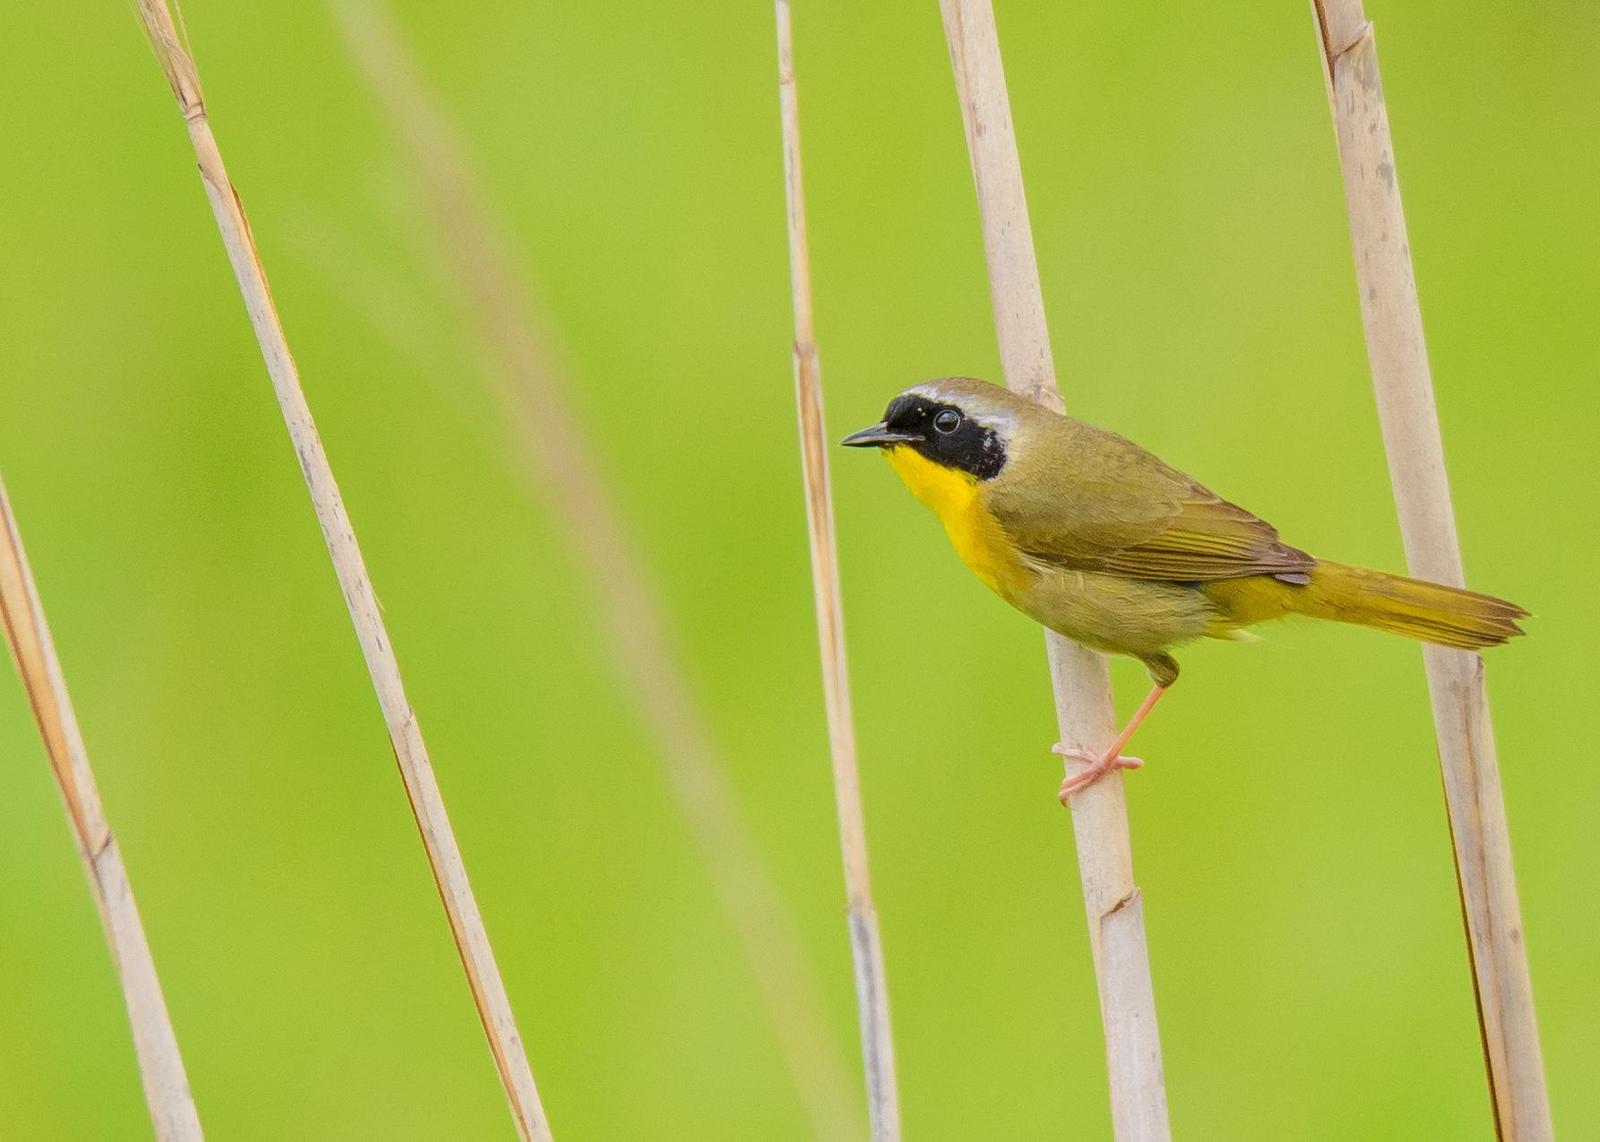 Common Yellowthroat Photo by Keshava Mysore